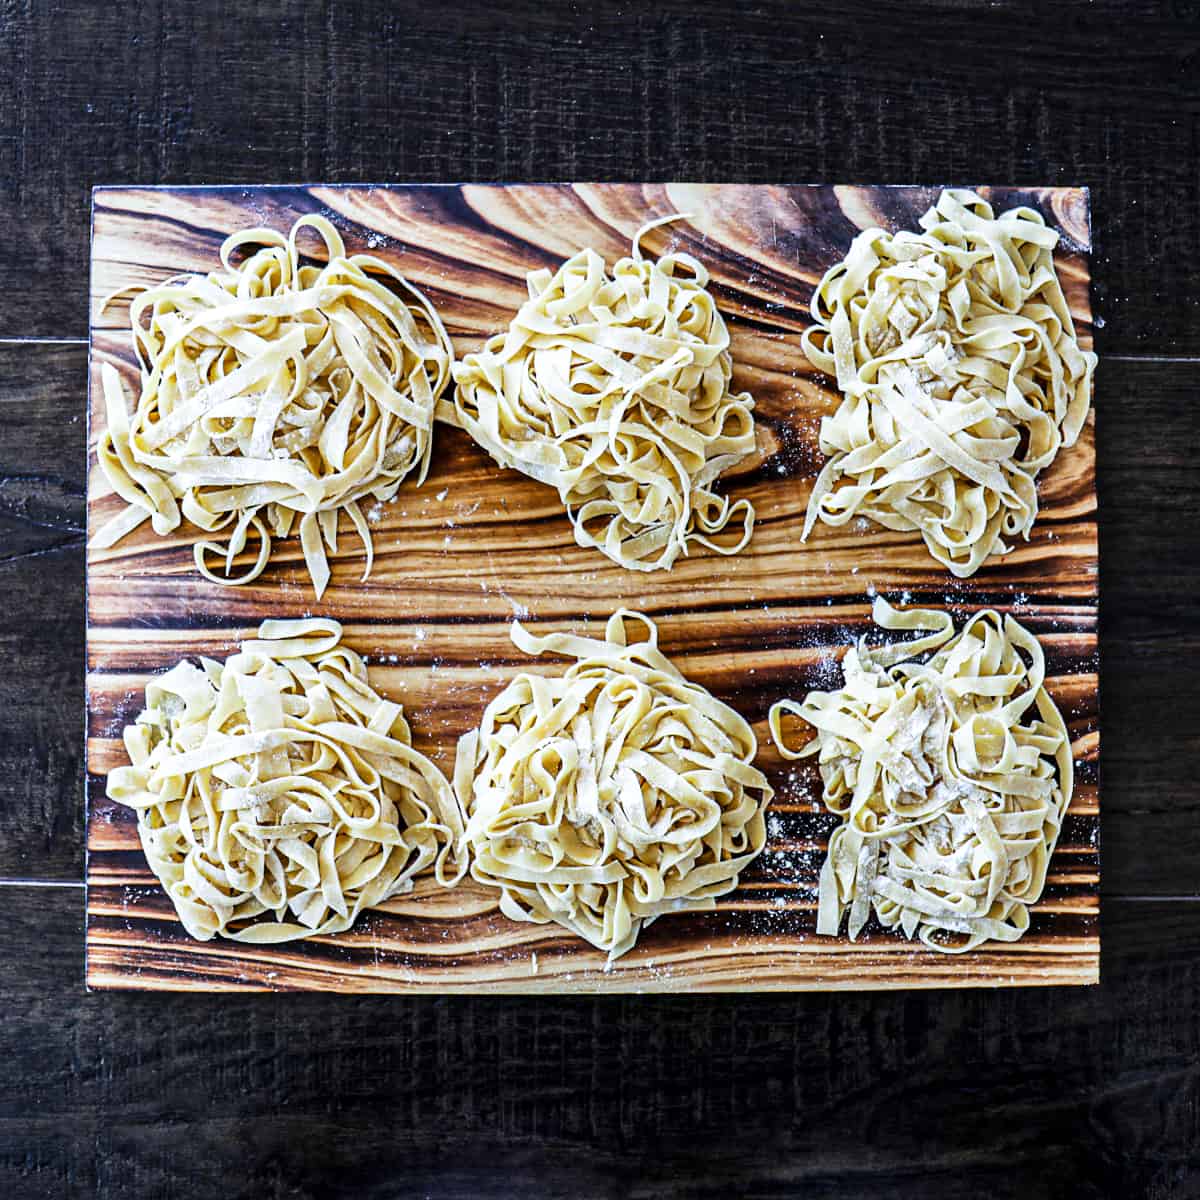 https://sipbitego.com/wp-content/uploads/2021/05/Homemade-Pasta-Recipe-Fettuccine-Linguine-Spaghetti-Sip-Bite-Go-cut-pasta-noodle-nests-on-a-cutting-board.jpg